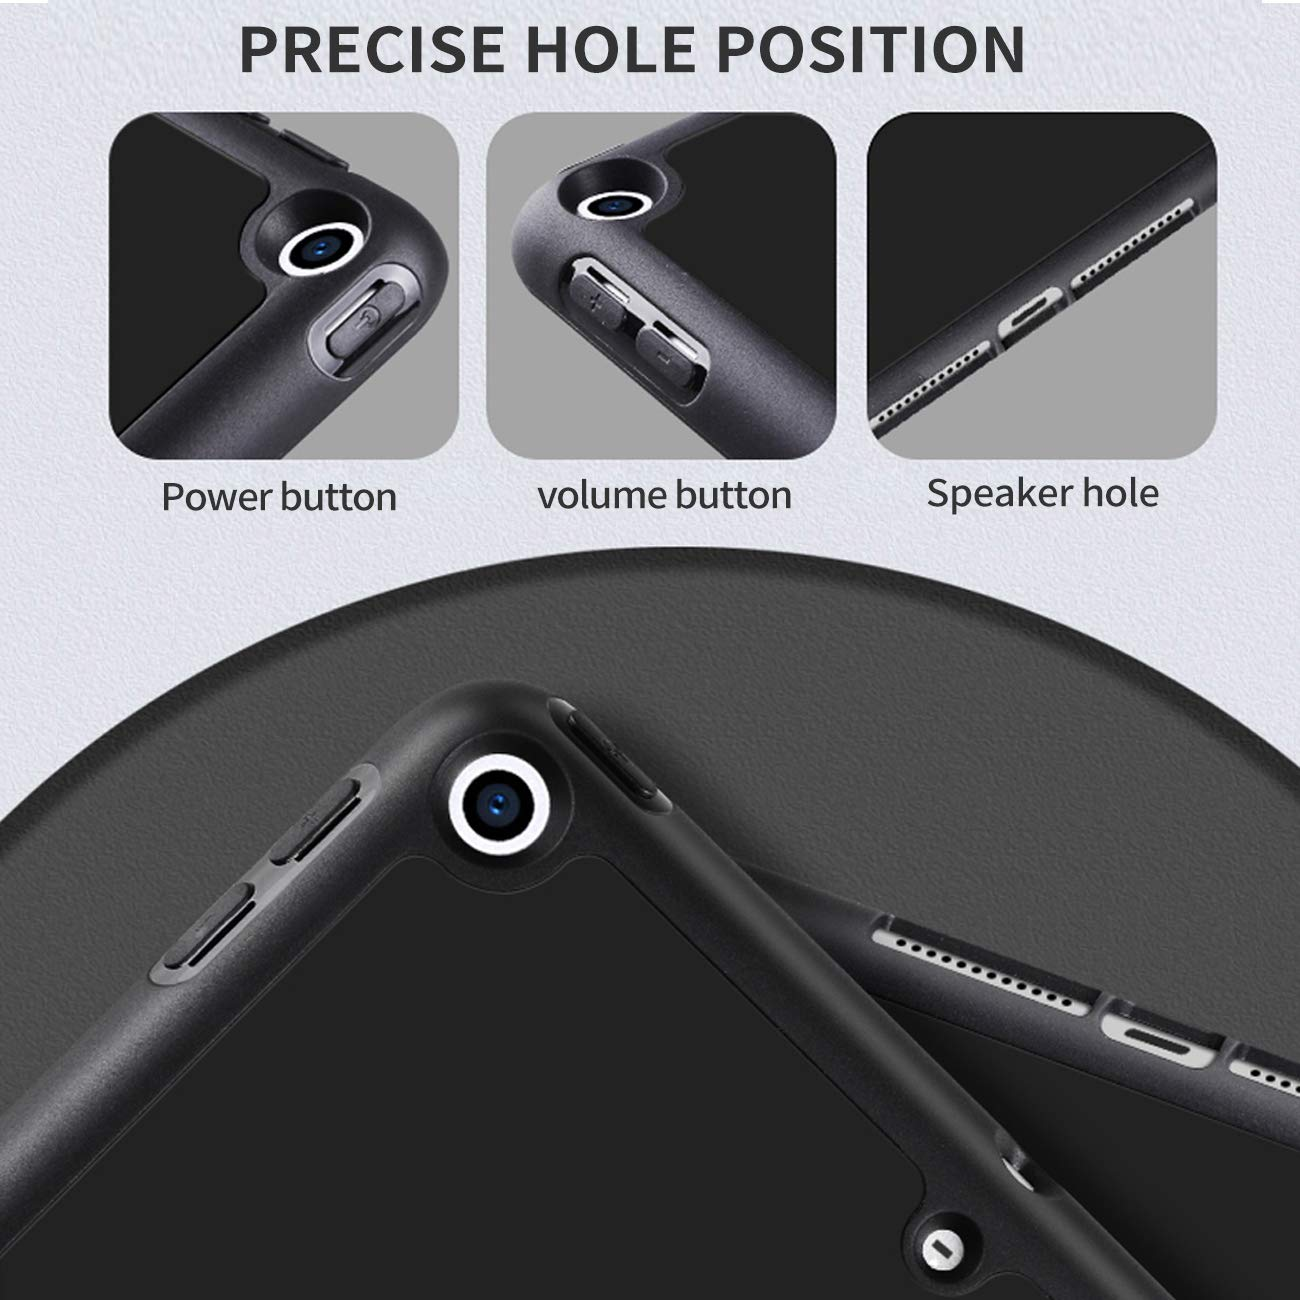 Hole position